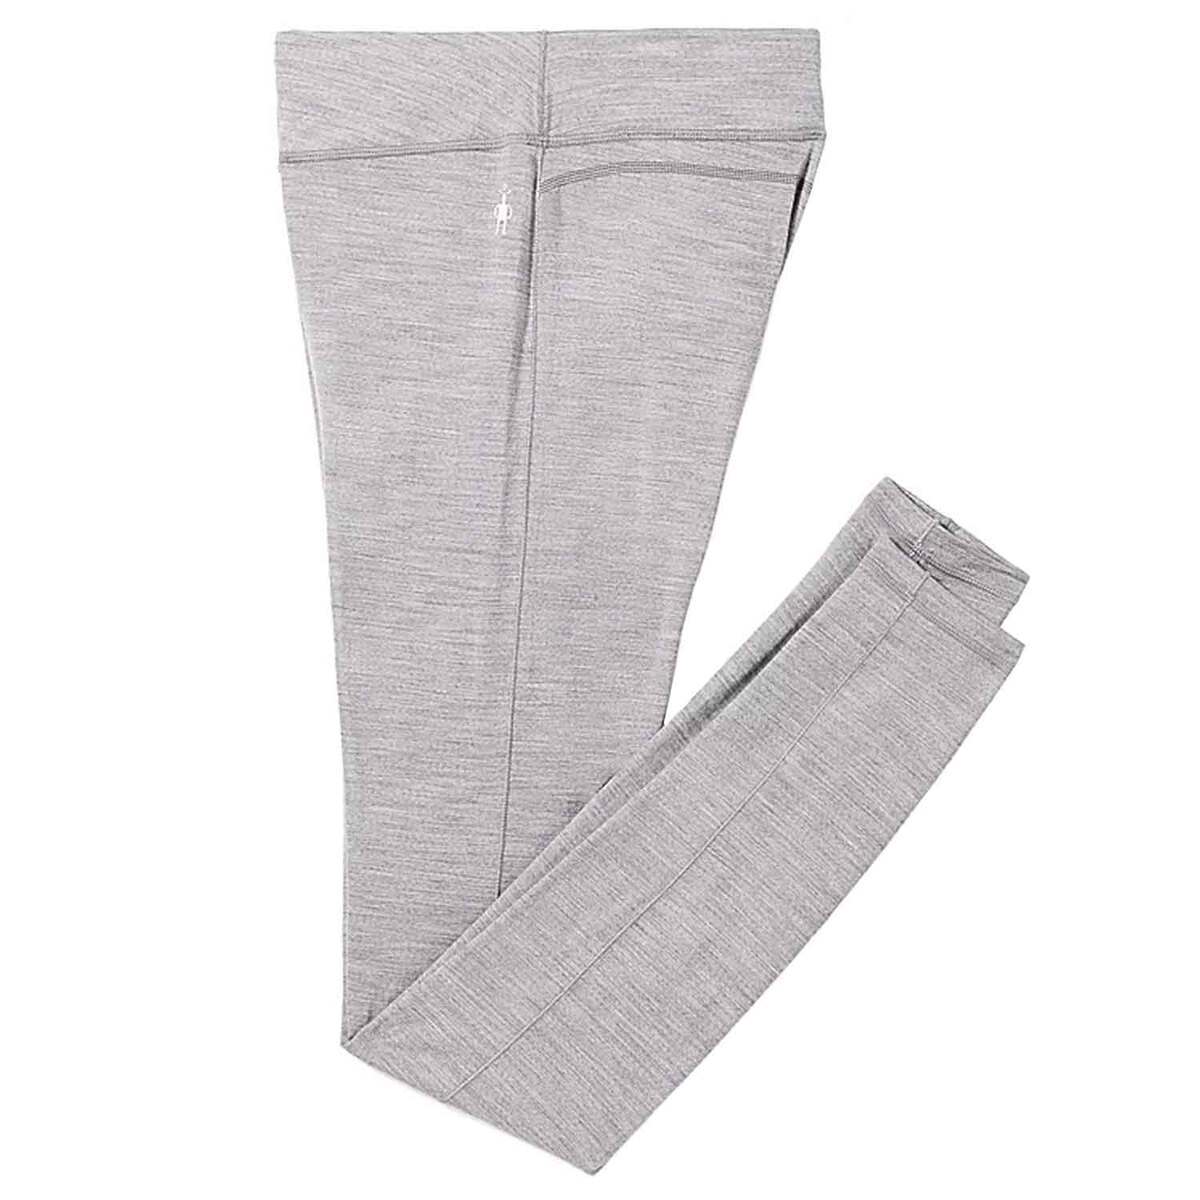 Grey Merino Wool Pants - Heavyweight Base Layer